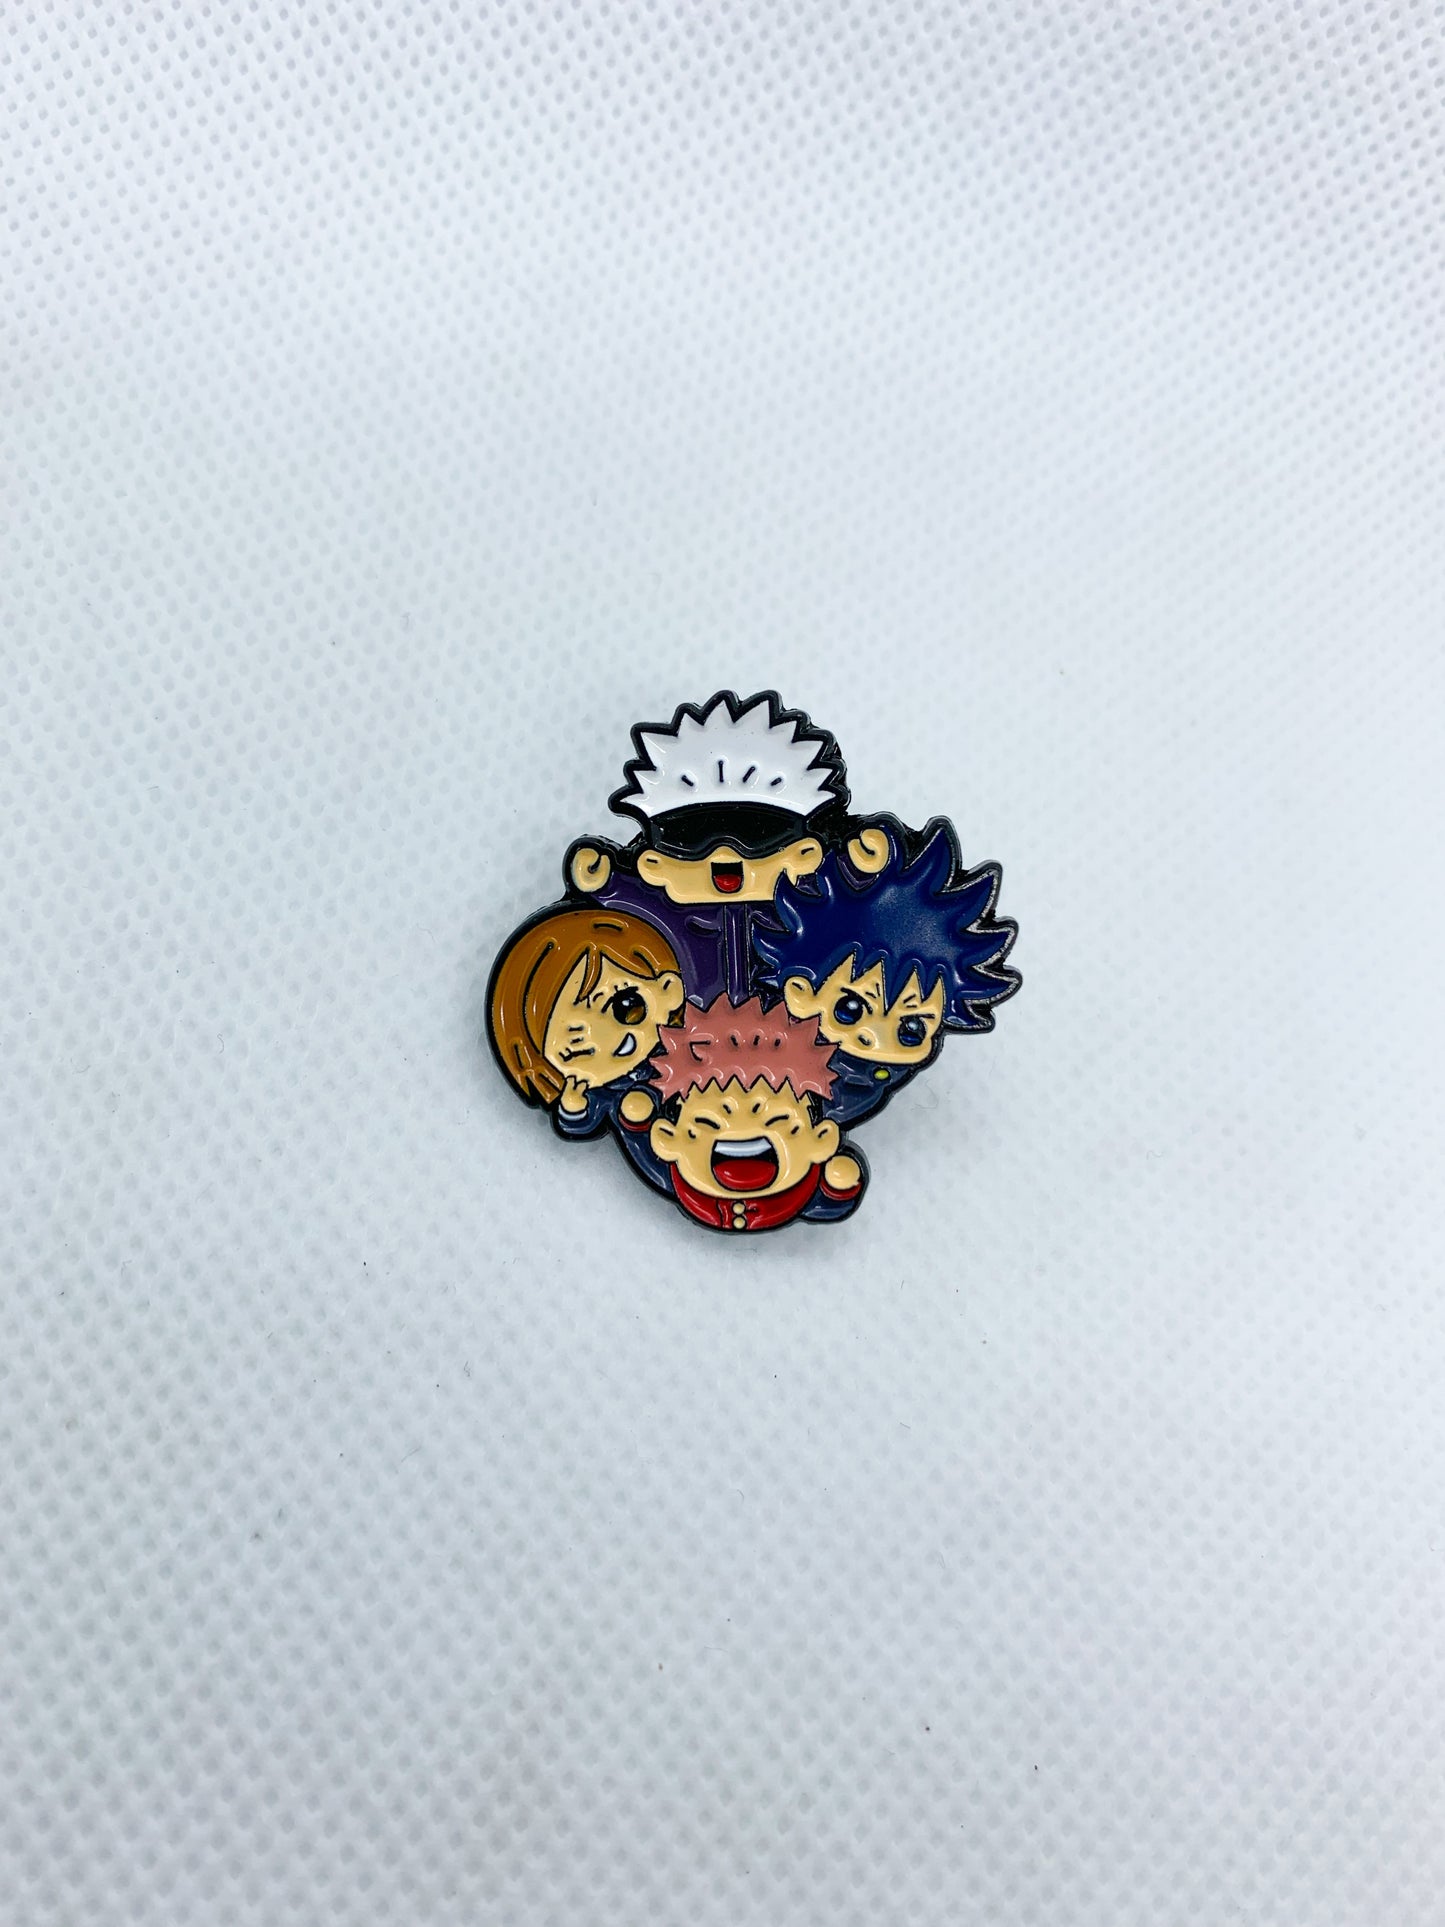 Anime Pins / Brooch